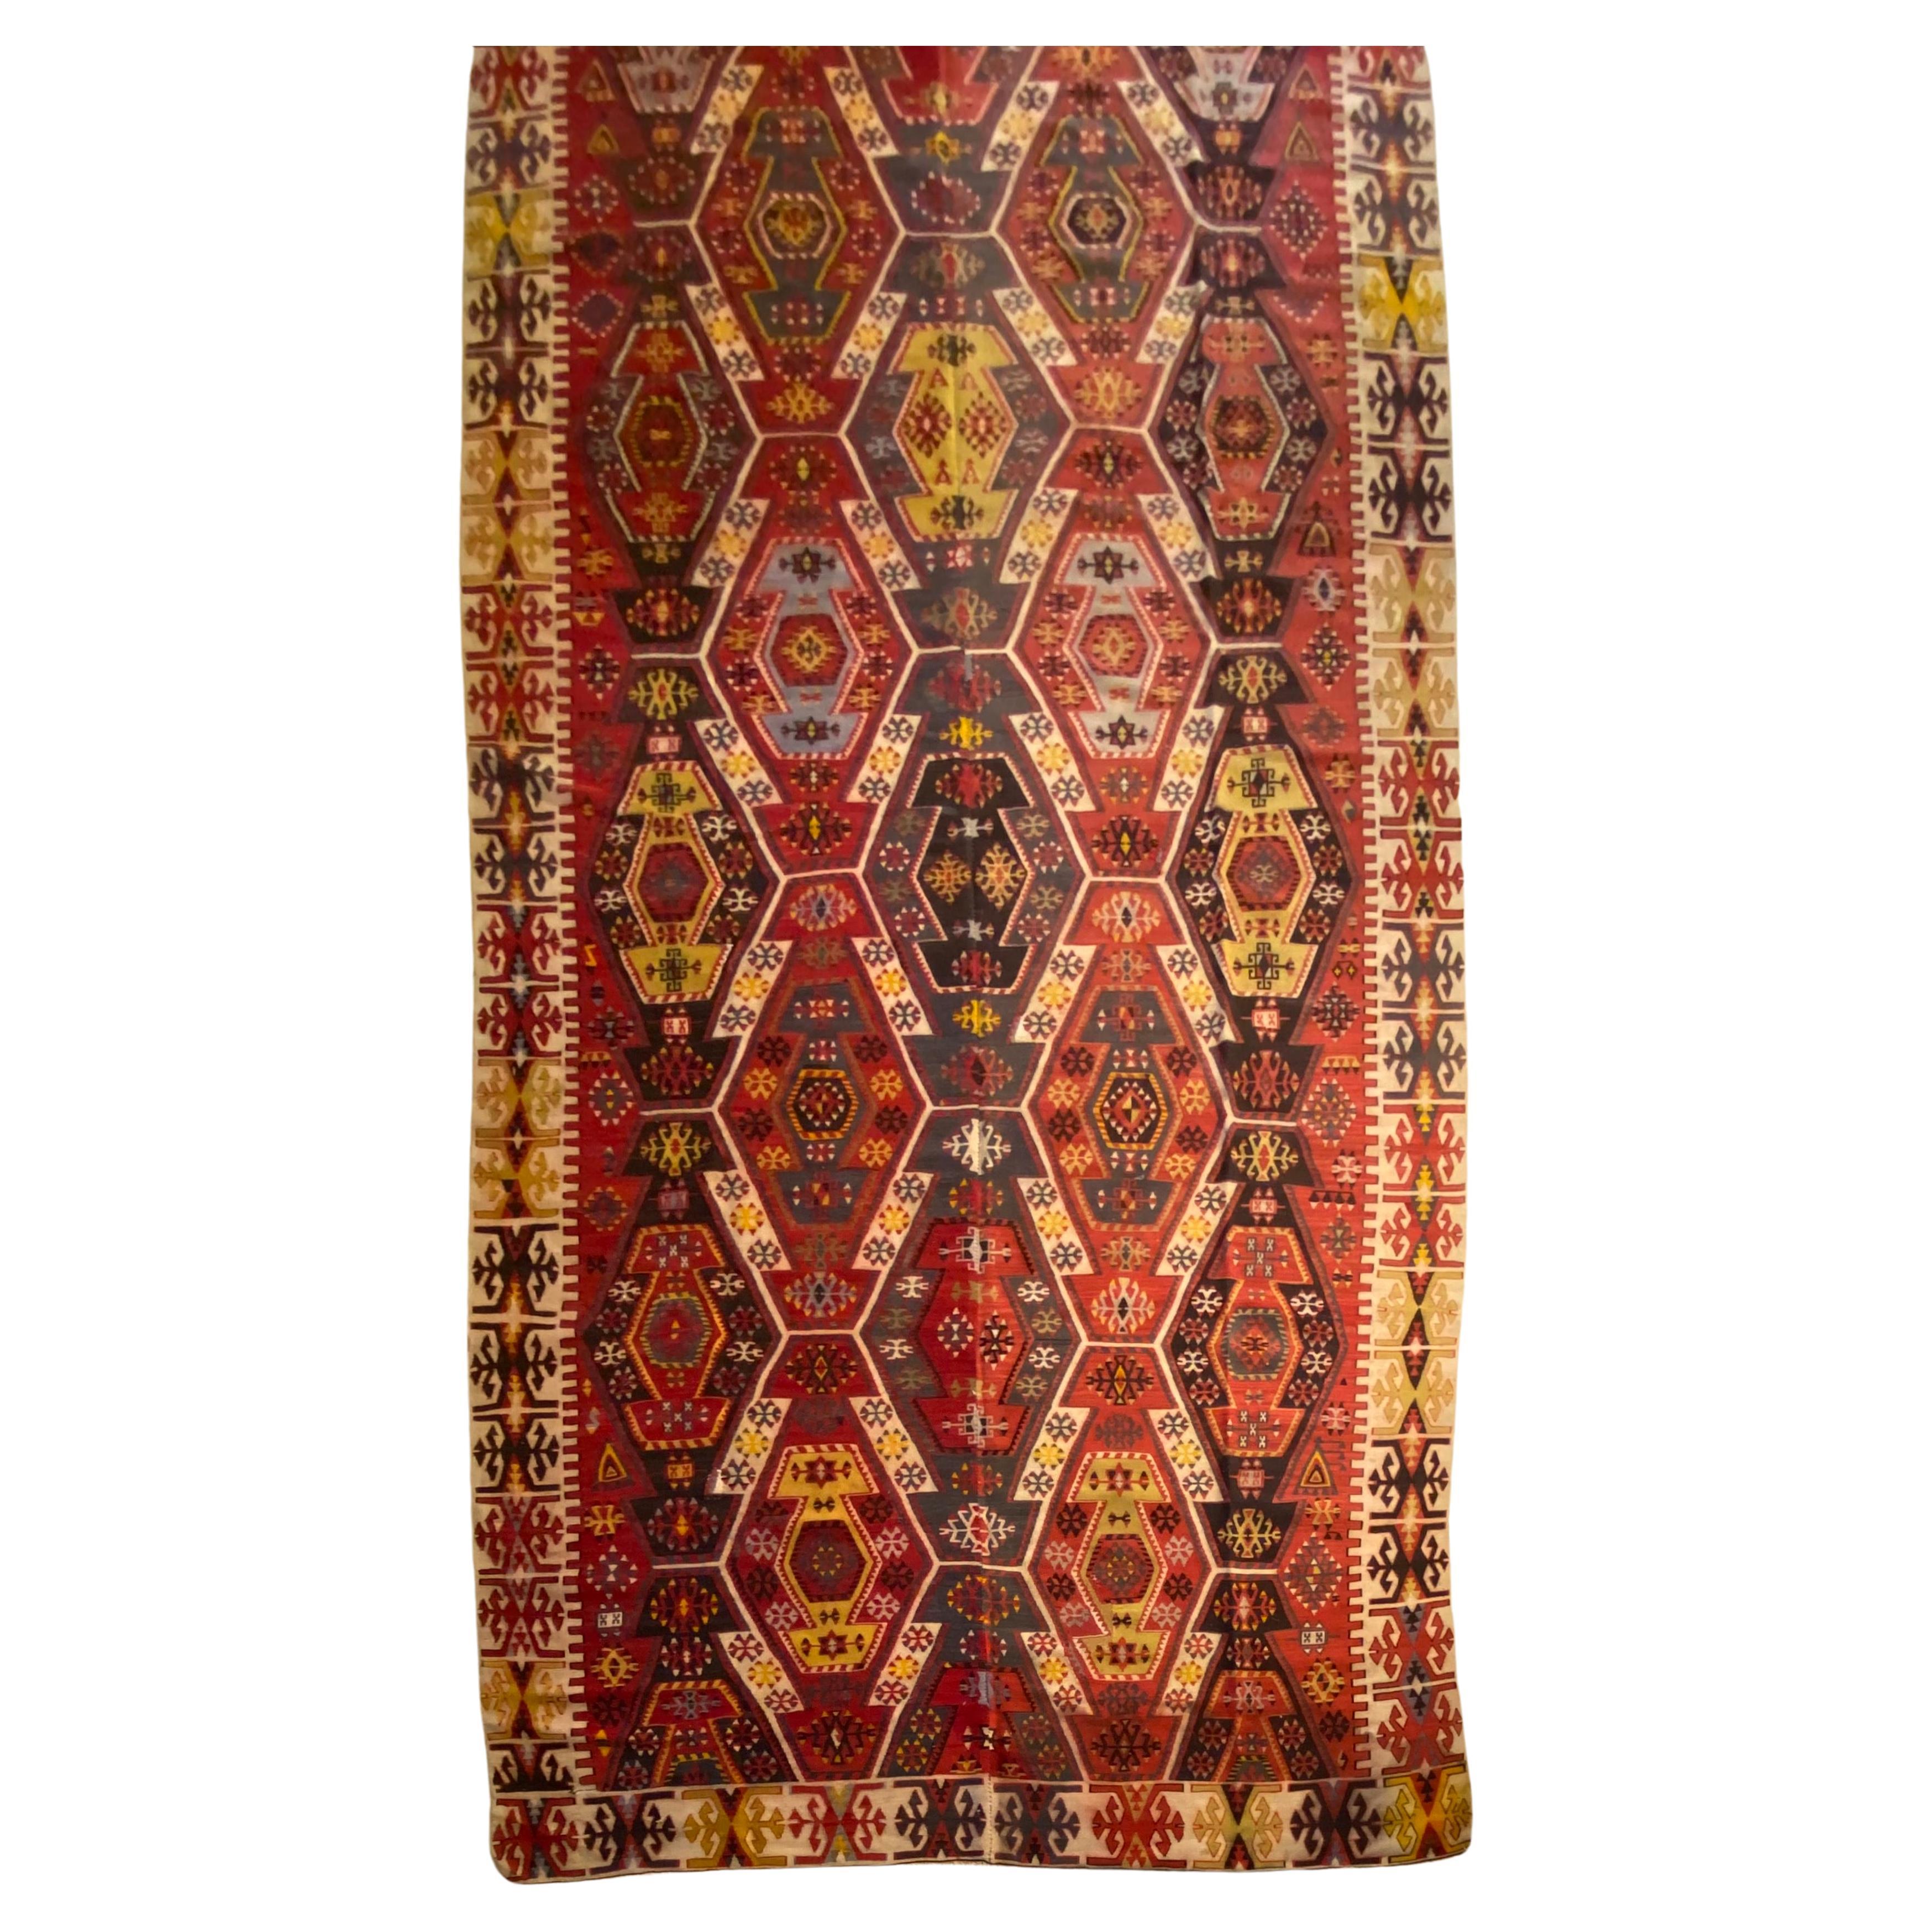 Large American Southwestern Tribal Style Kilim Rug